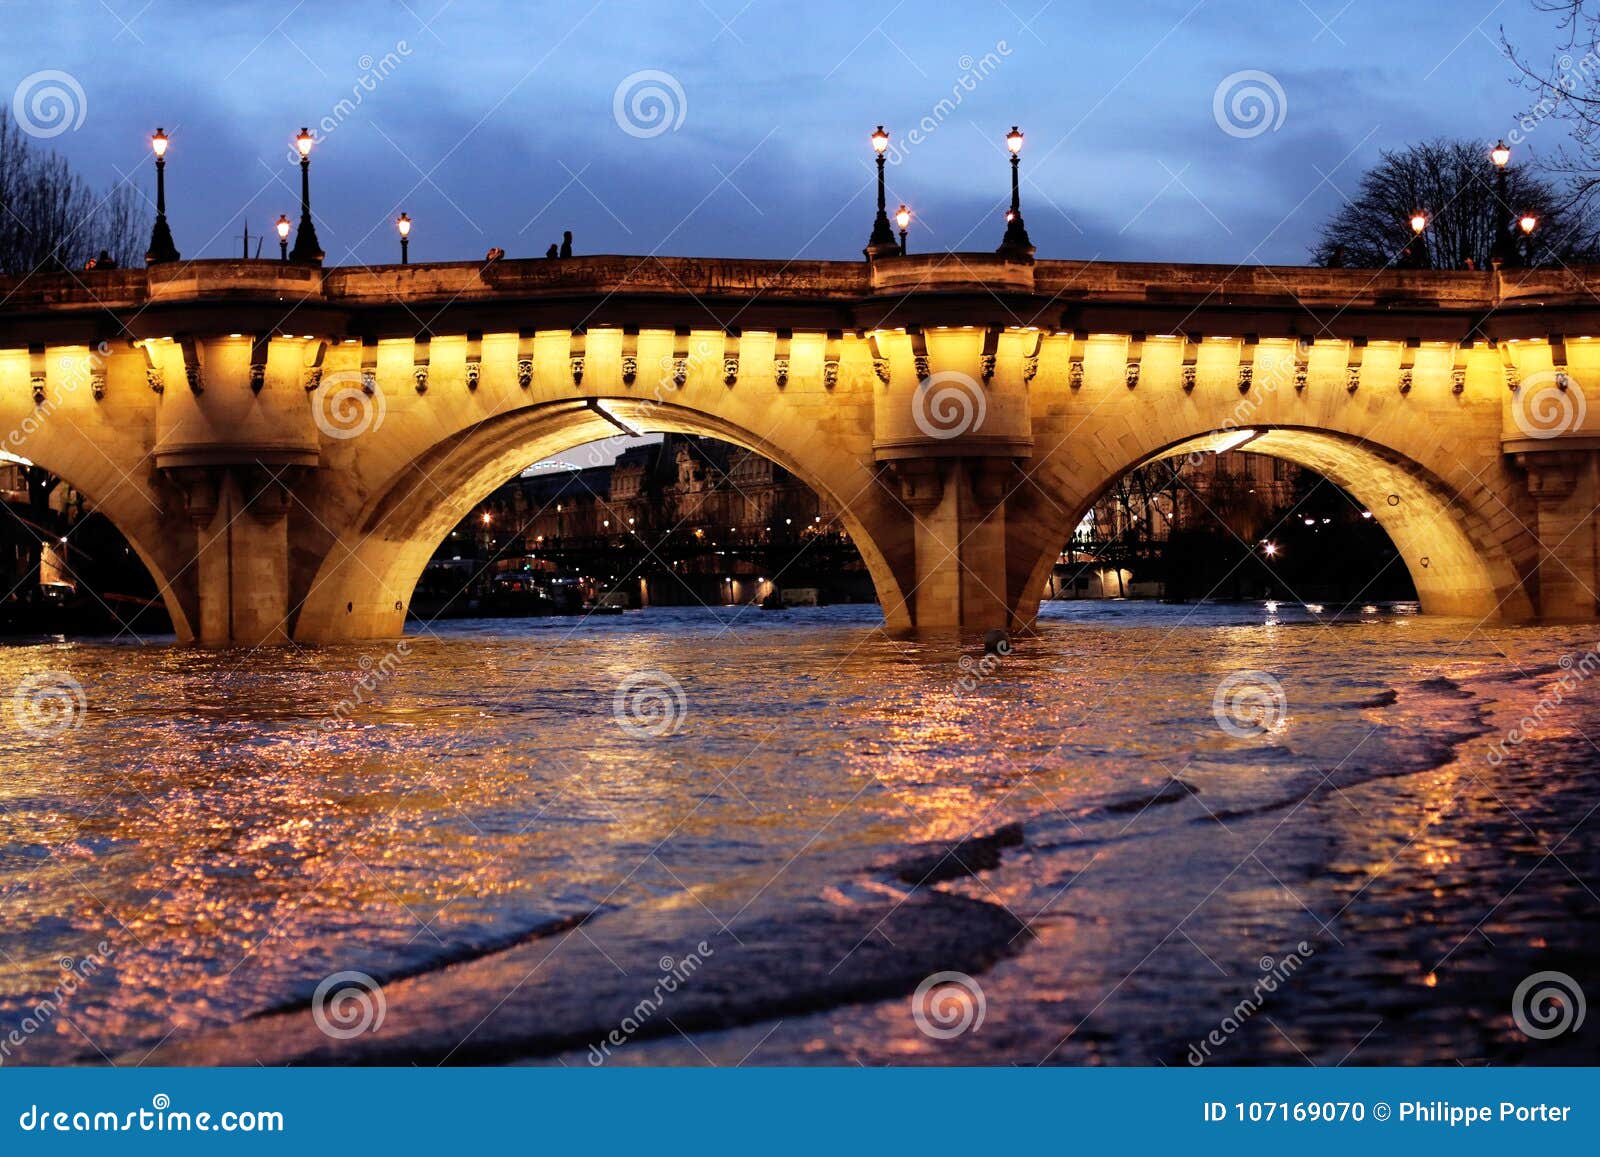 paris bridge pont neuf seine river floods